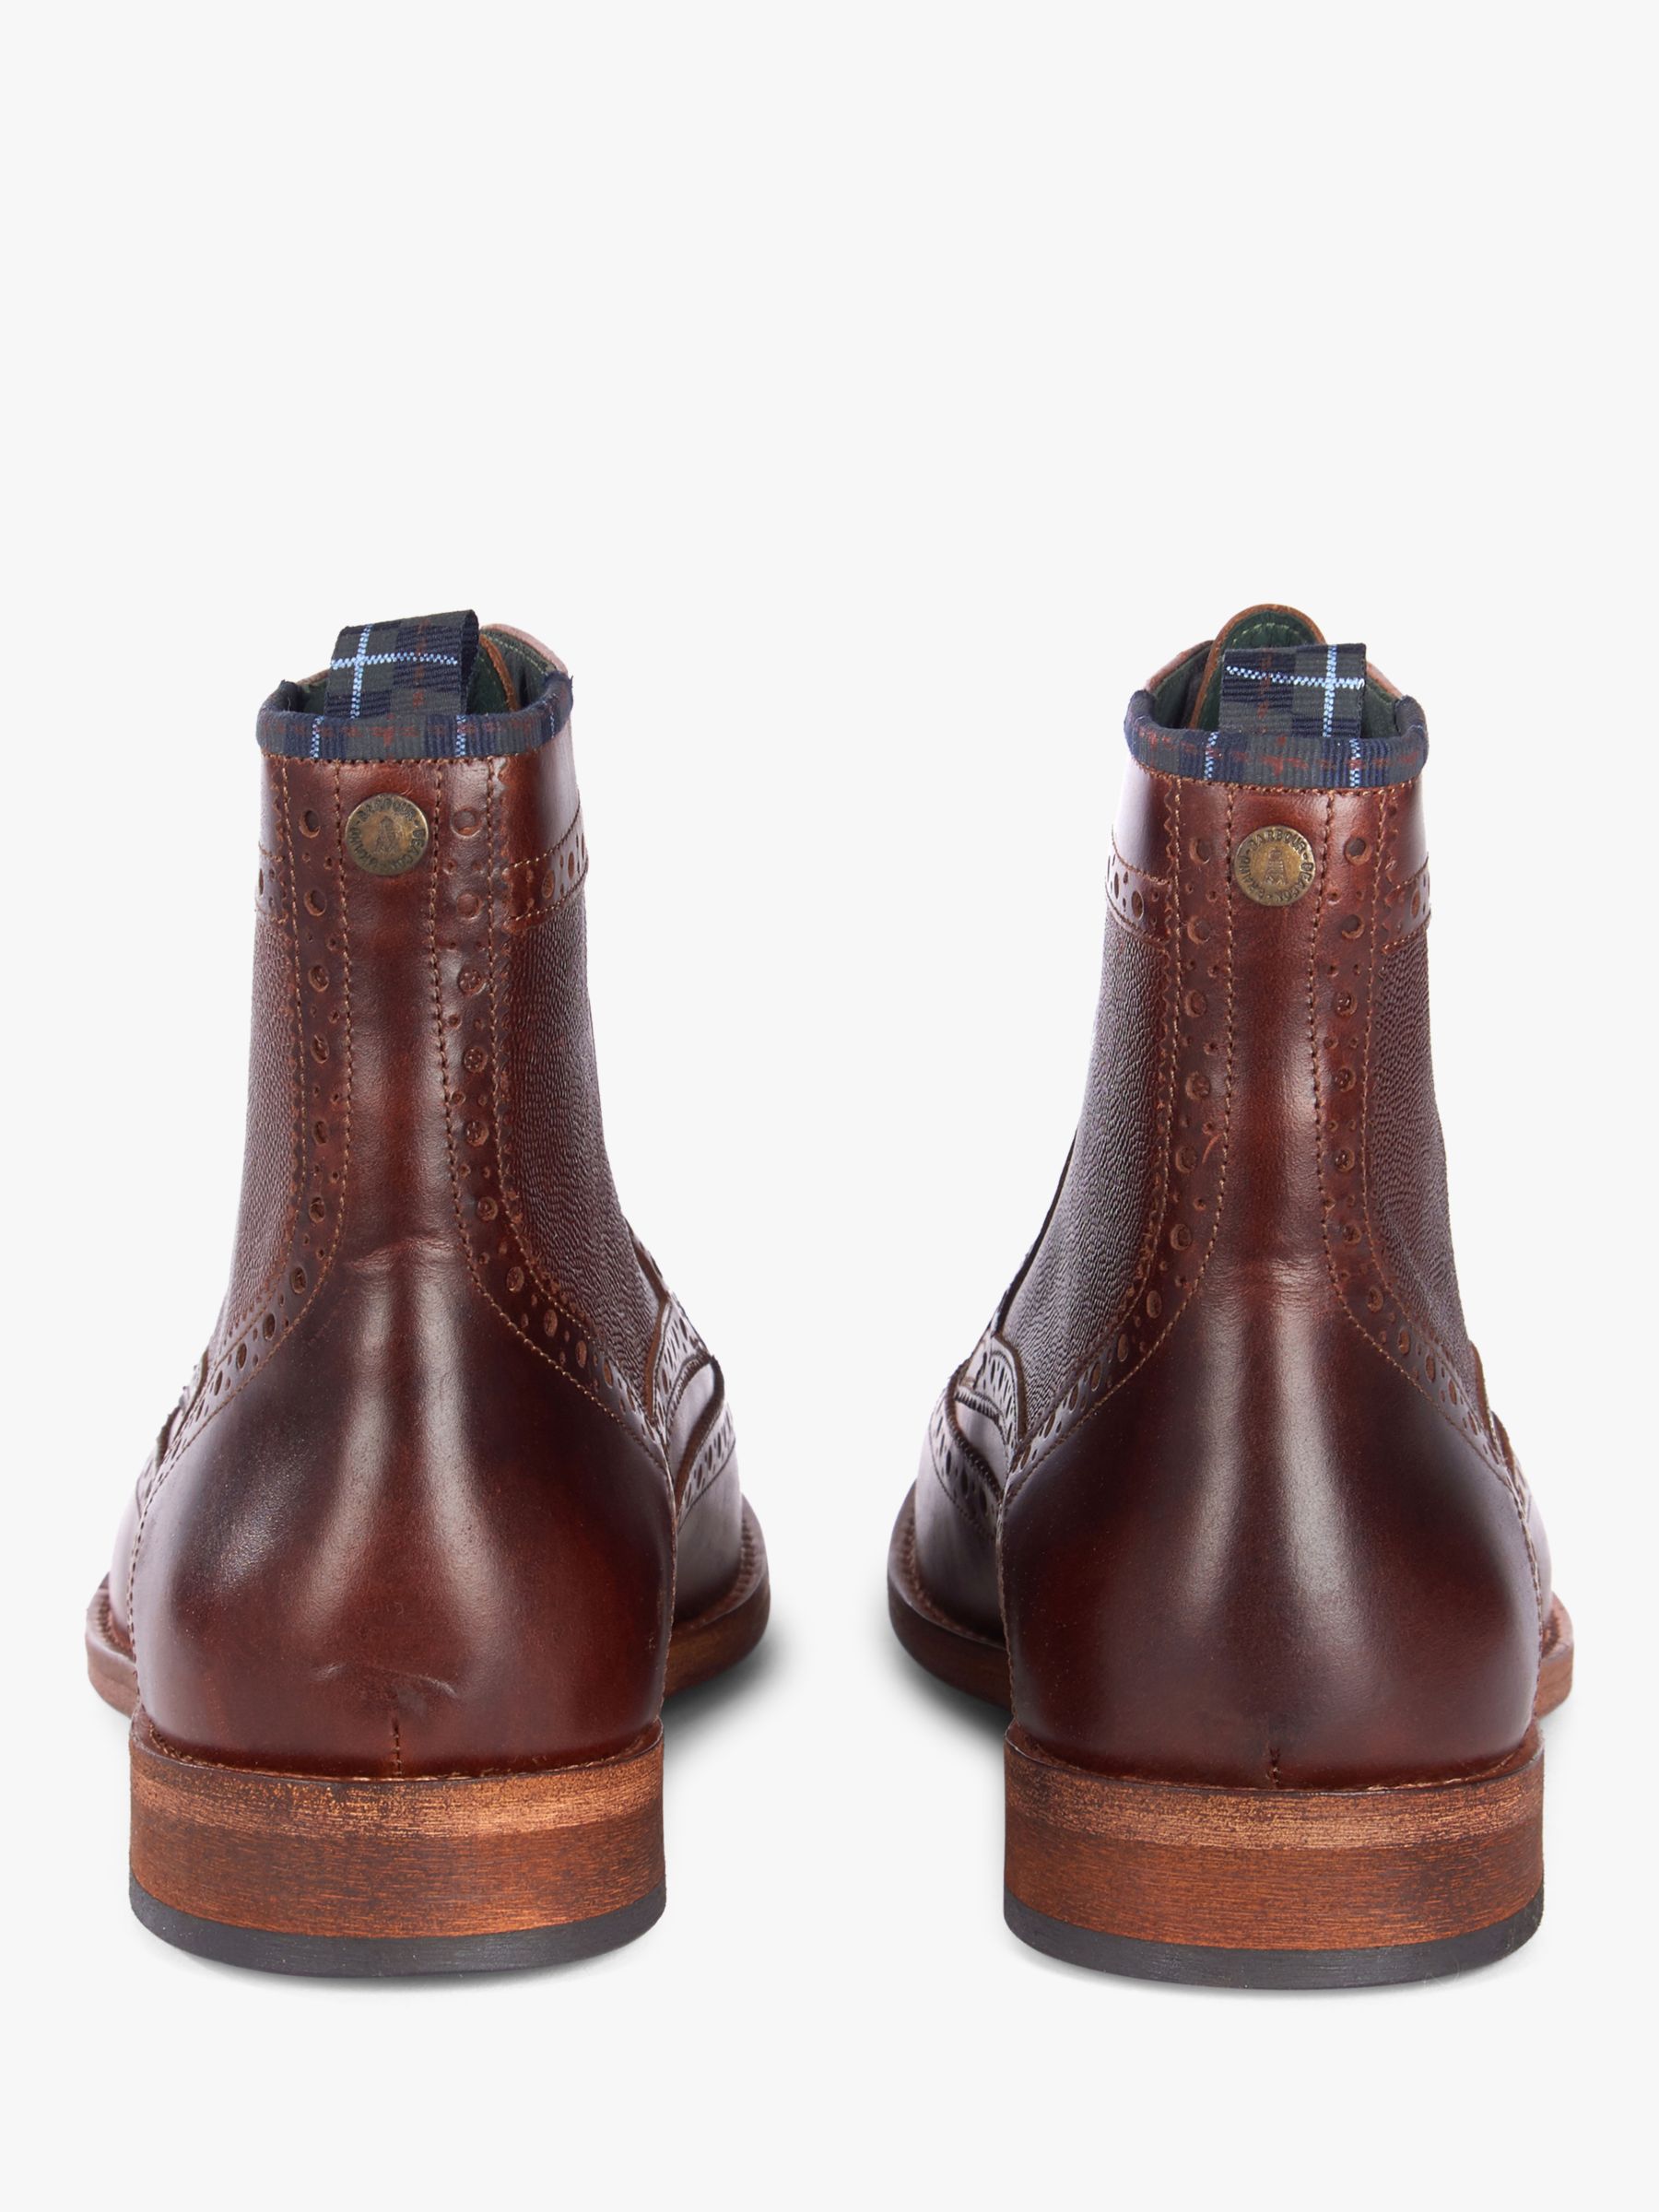 barbour belford boots